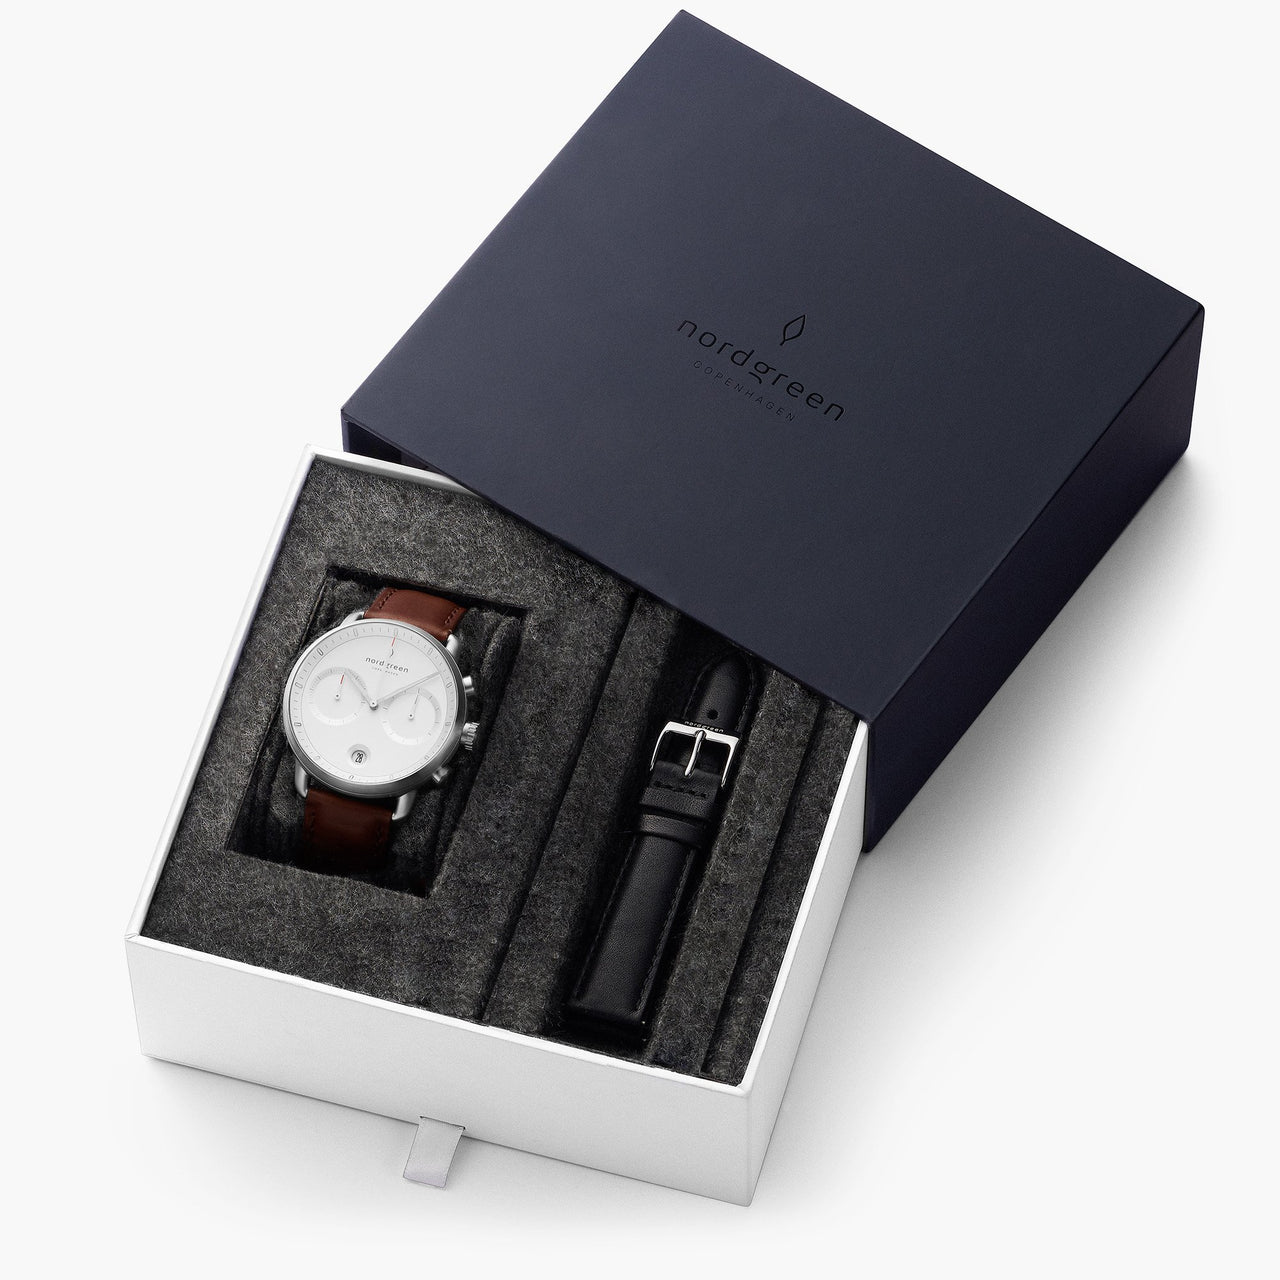 Nordgreen Pioneer Men's Watch Bundle Chronograph PI42SIXXLEBRLEBL - Watches & Crystals